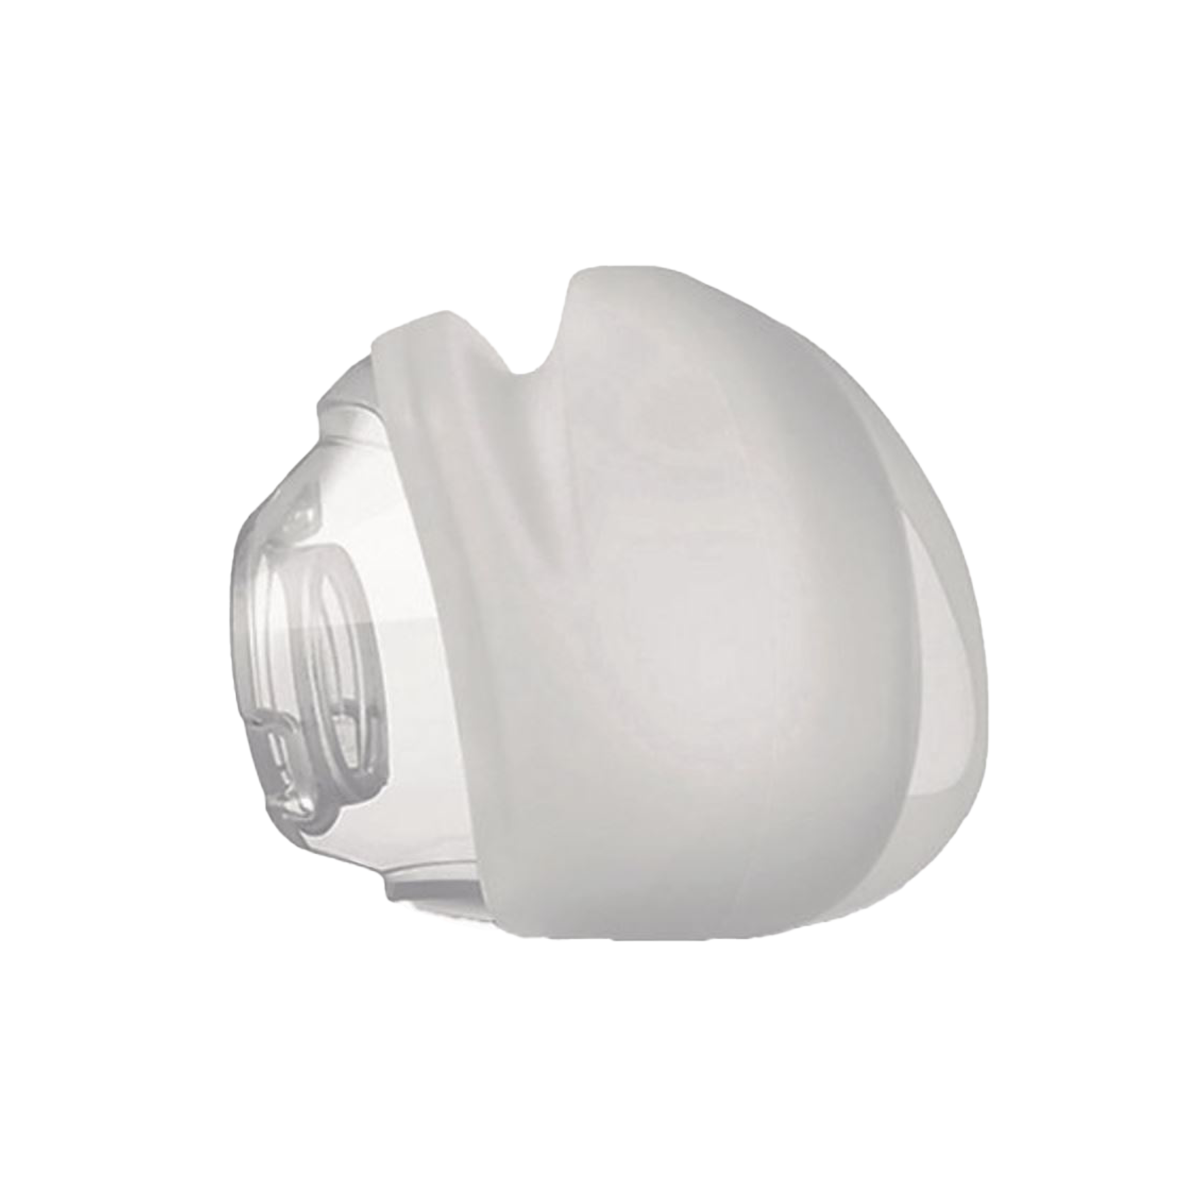 Ameriflex Comfort Series 3-Point Nasal Face Mask